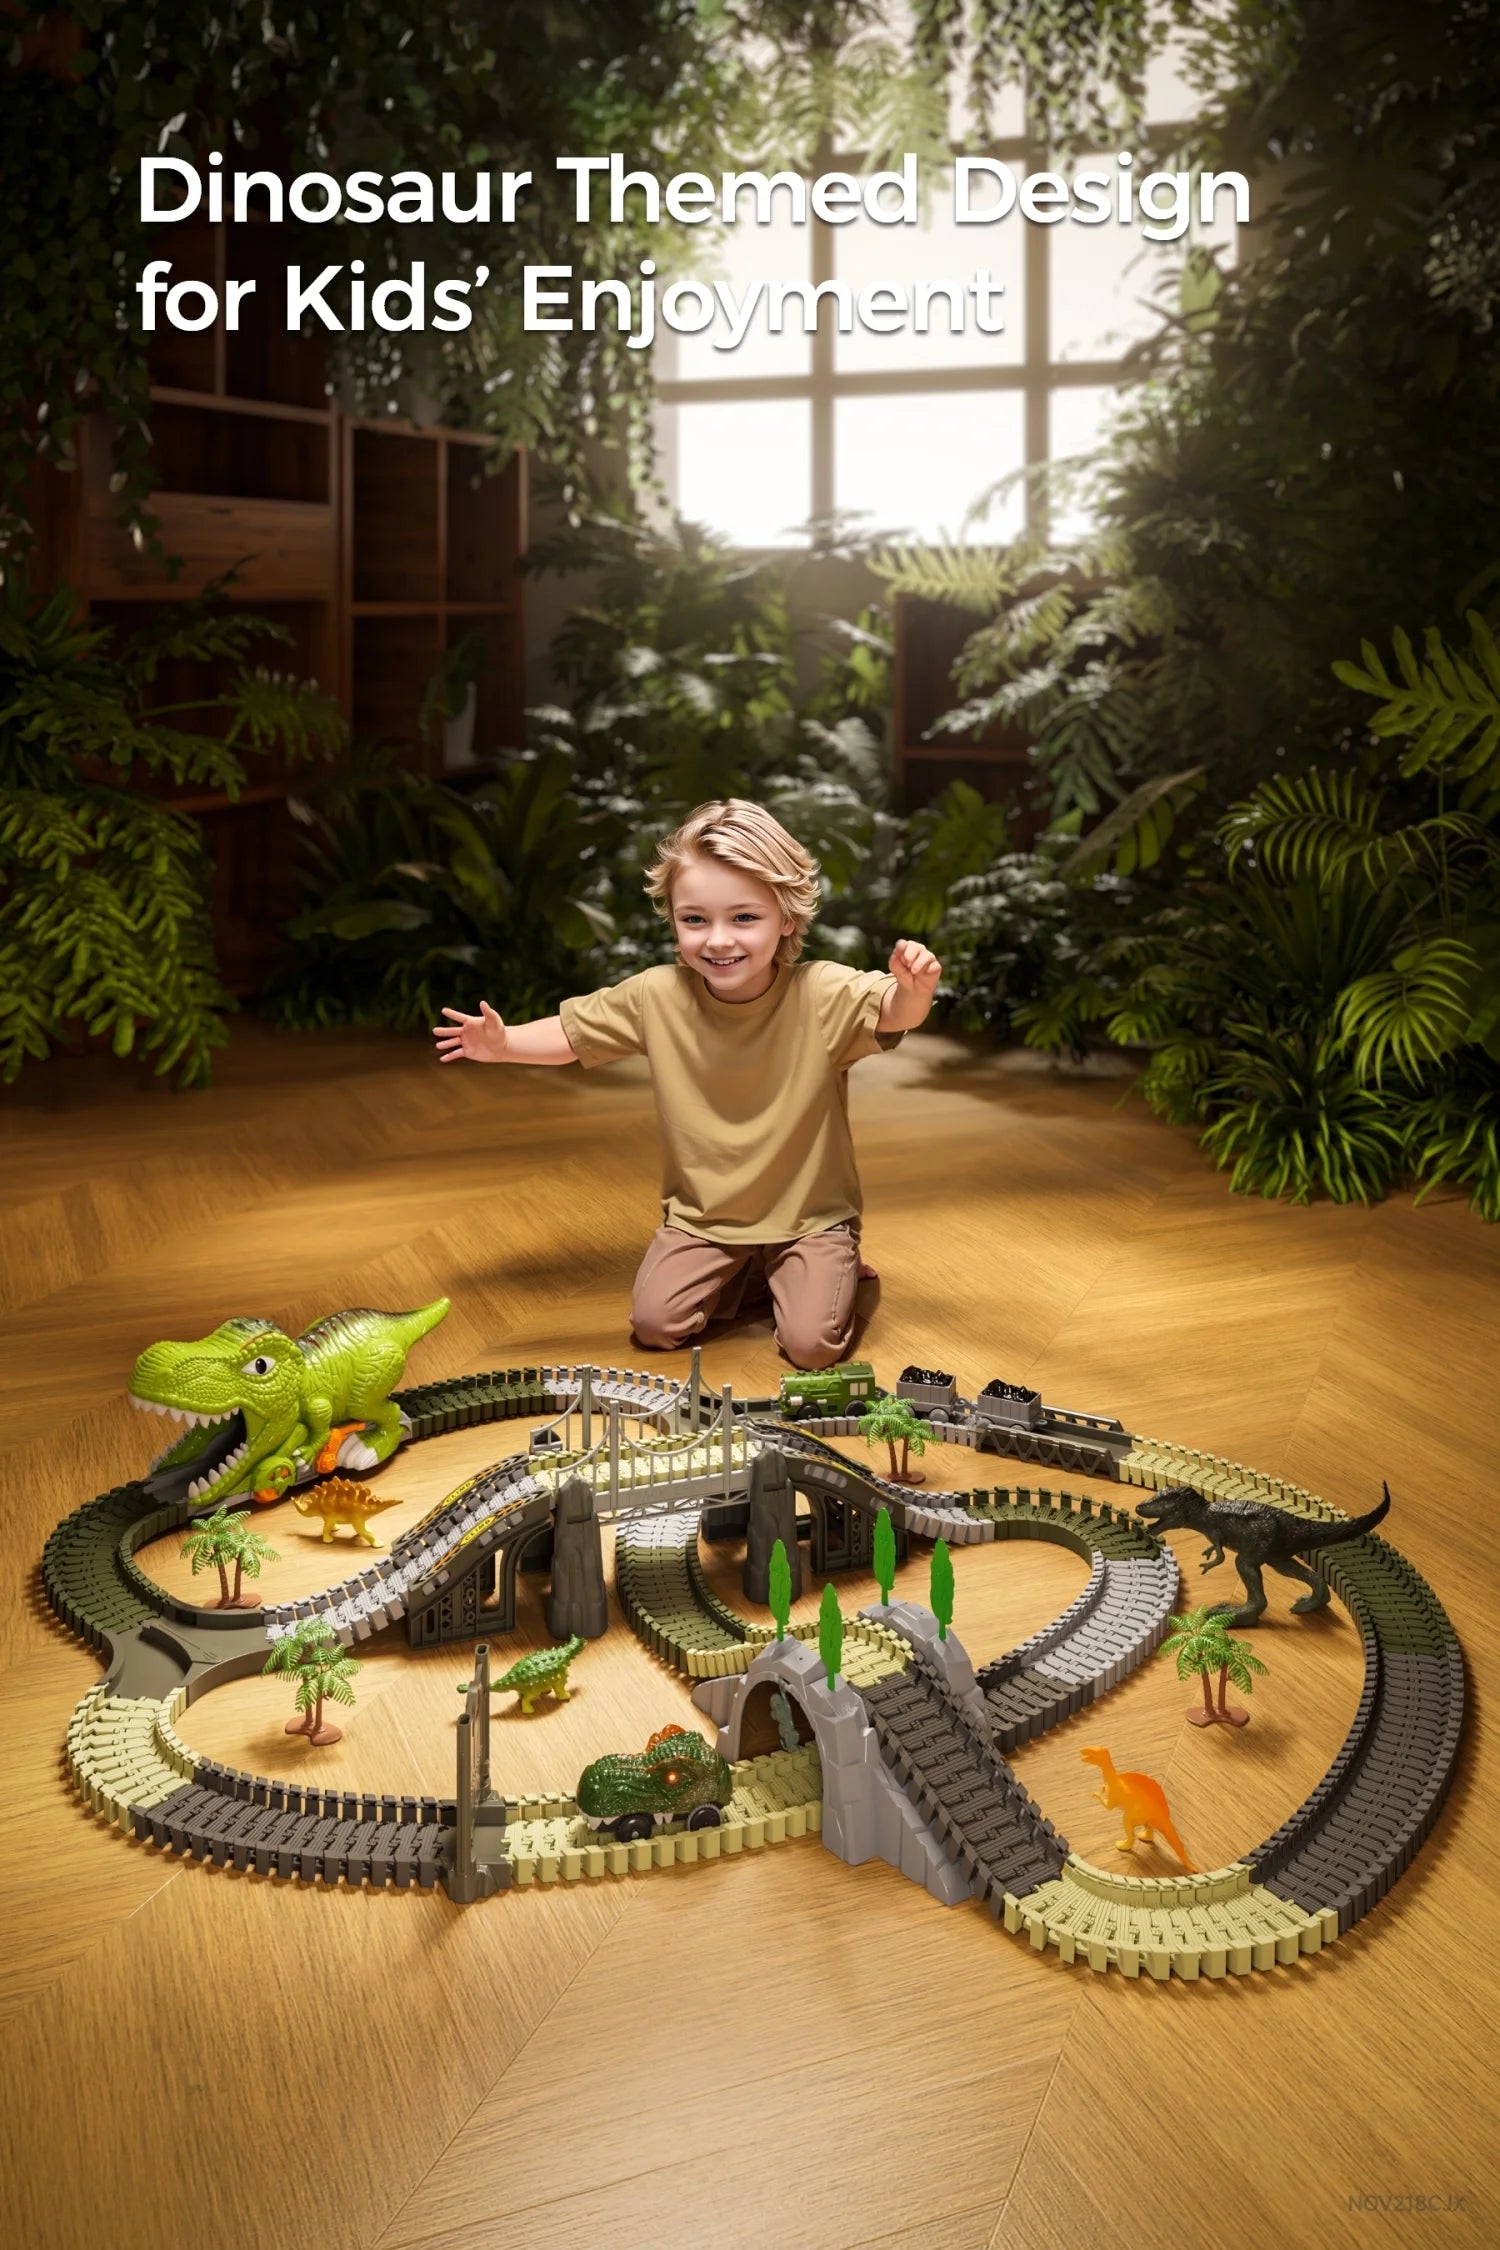 Flexible dinosaur train tracks for imaginative toddler play